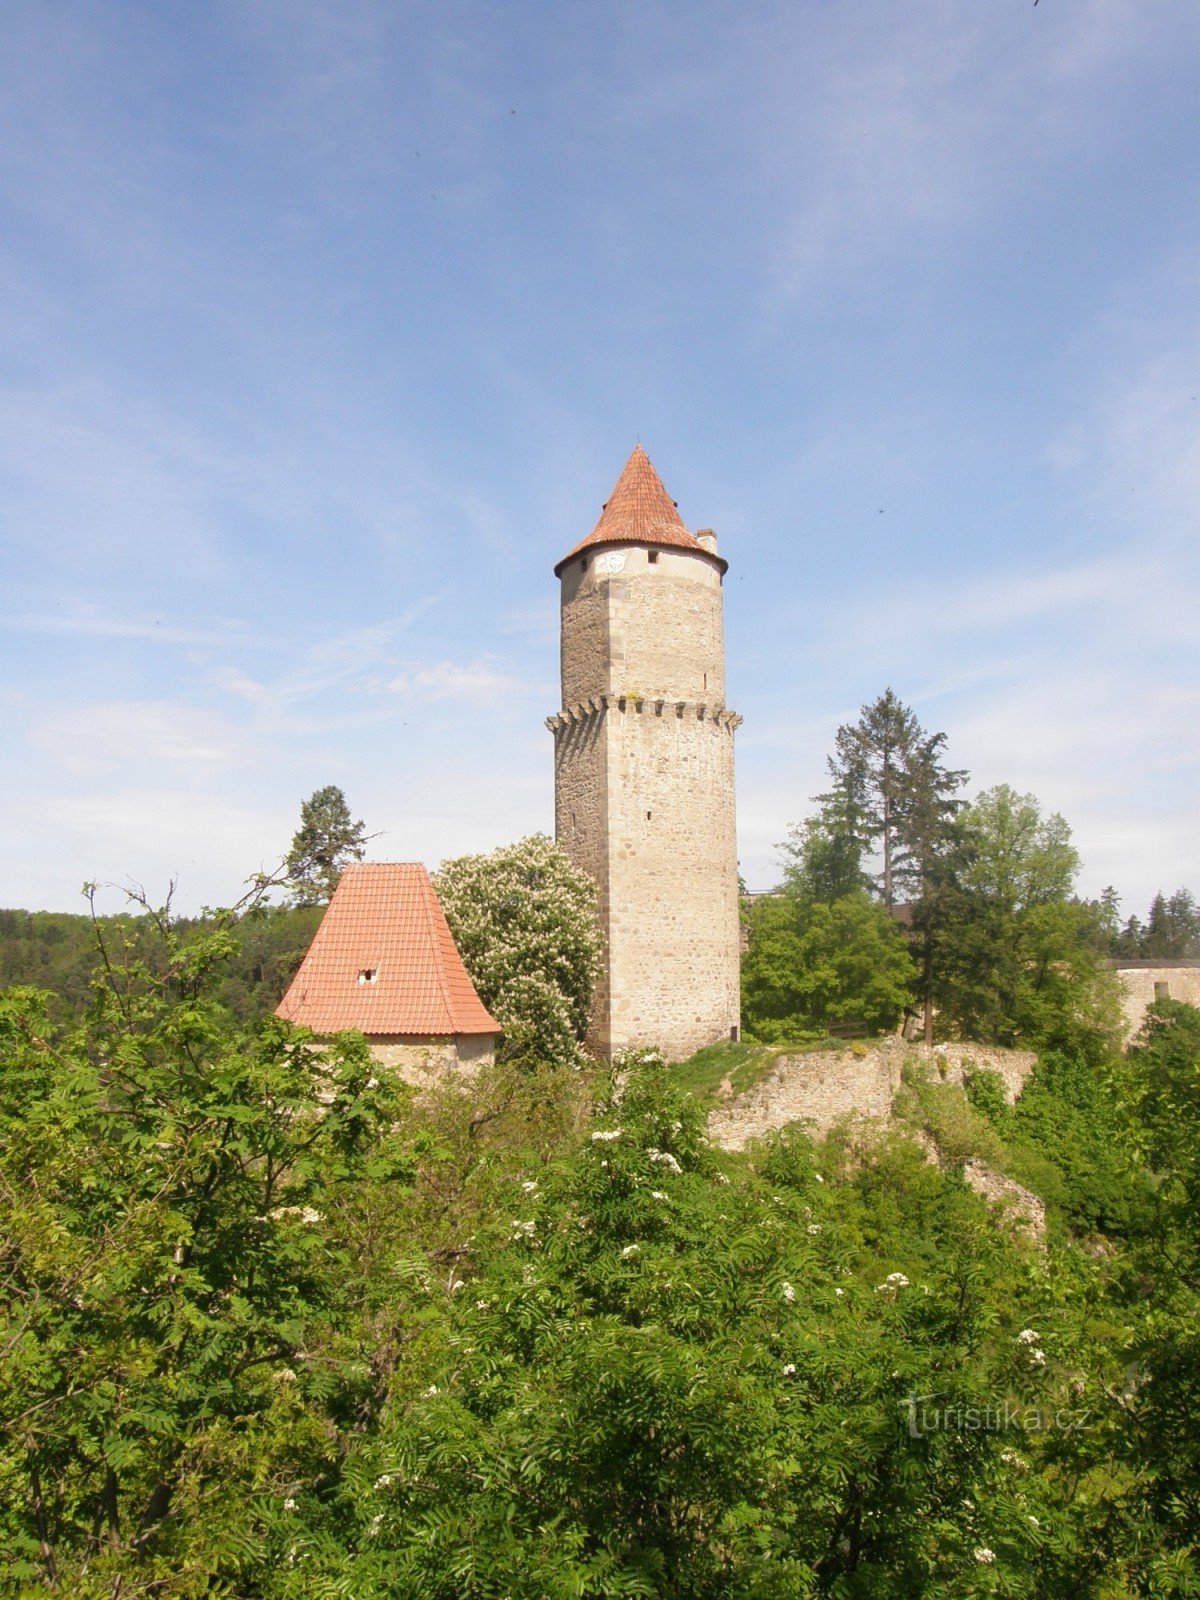 La porte Písecká et la tour Hláska sont indissociables